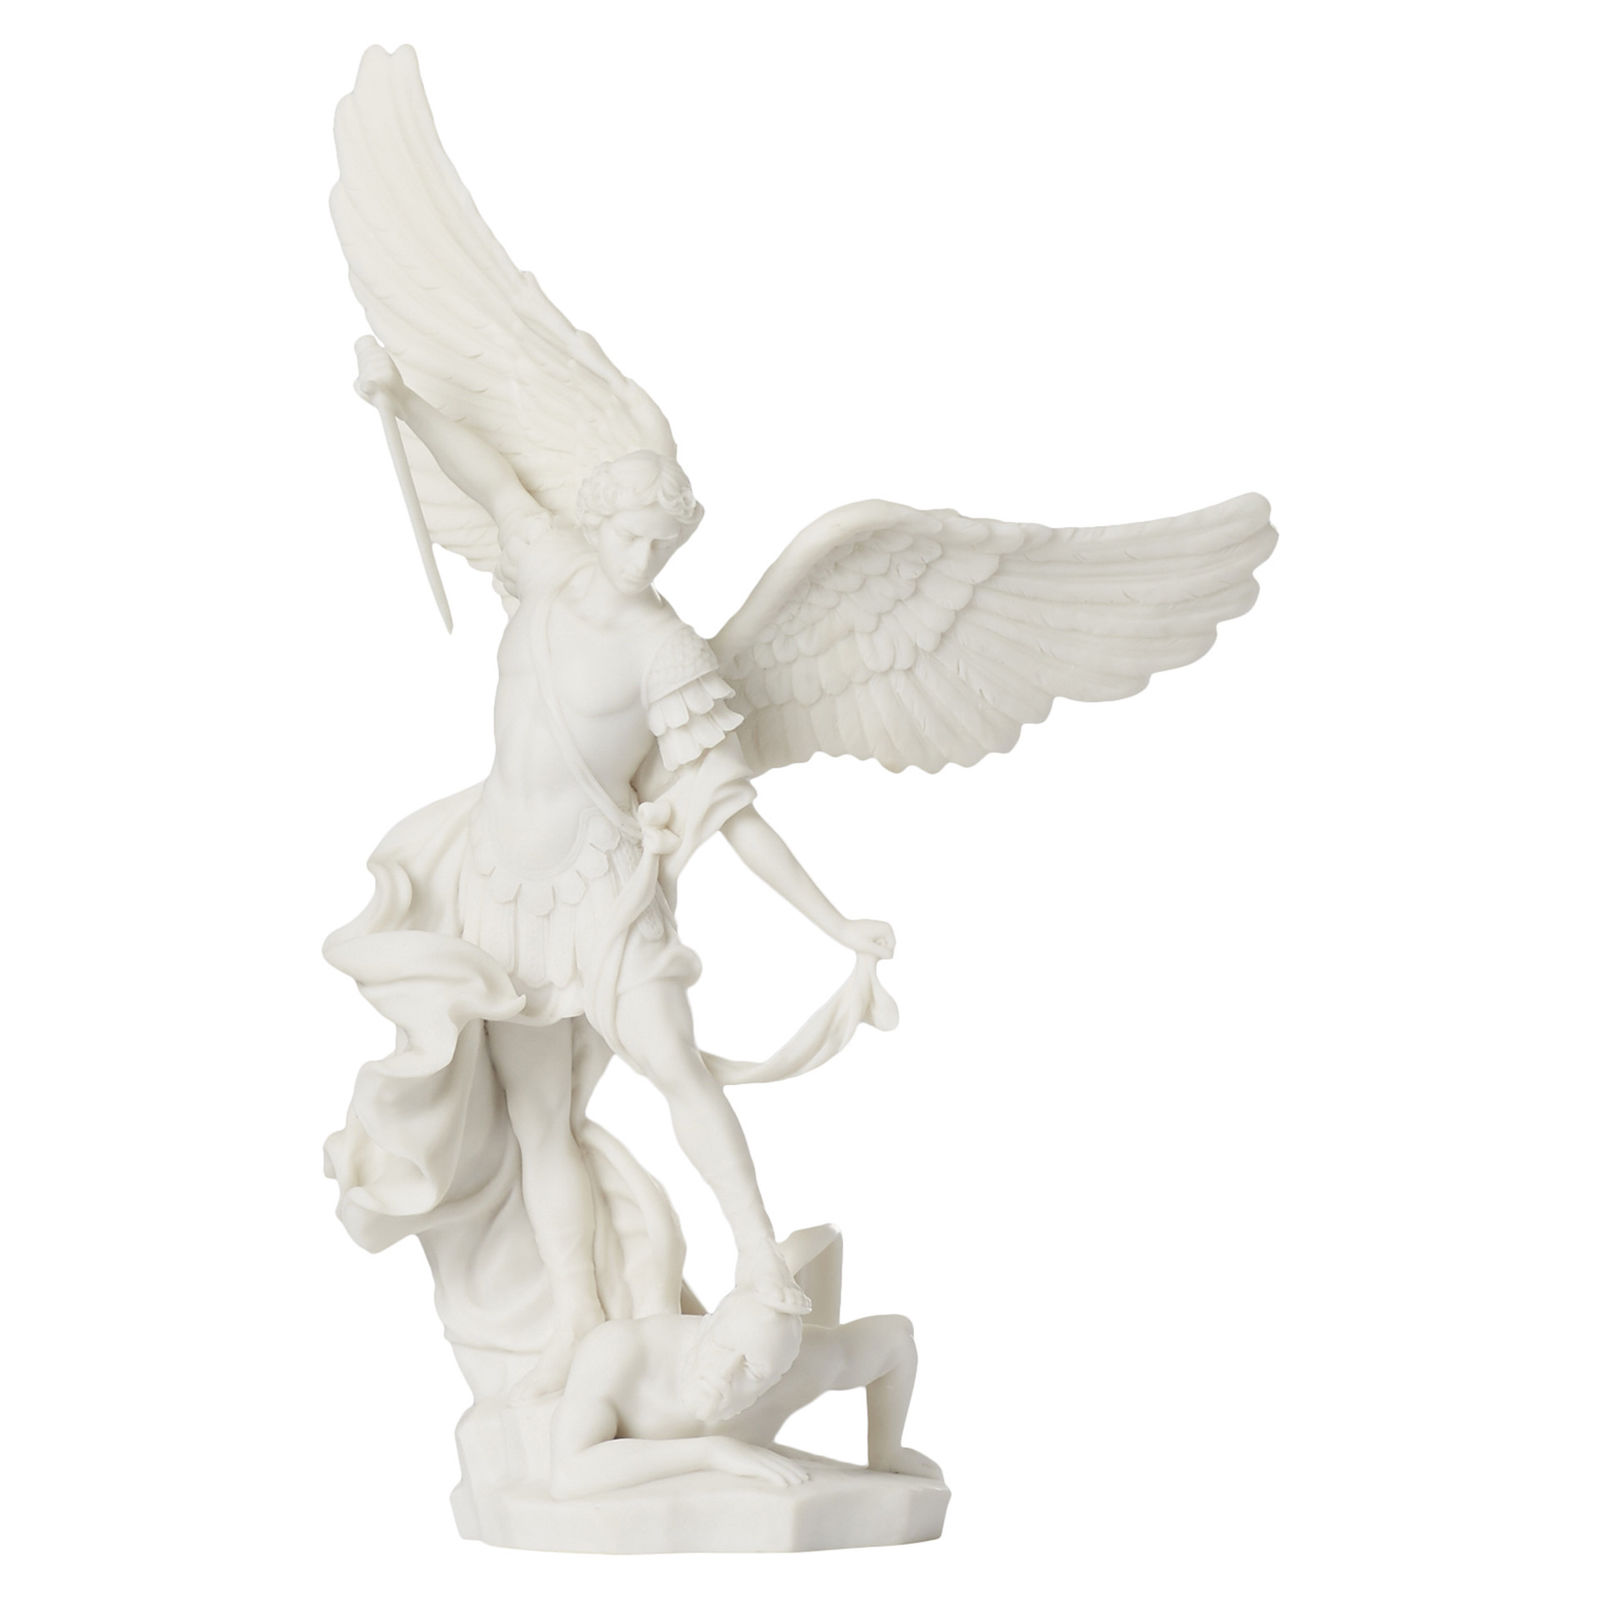 Design Toscano WU71543 Michael The Archangel Angel Statue | eBay